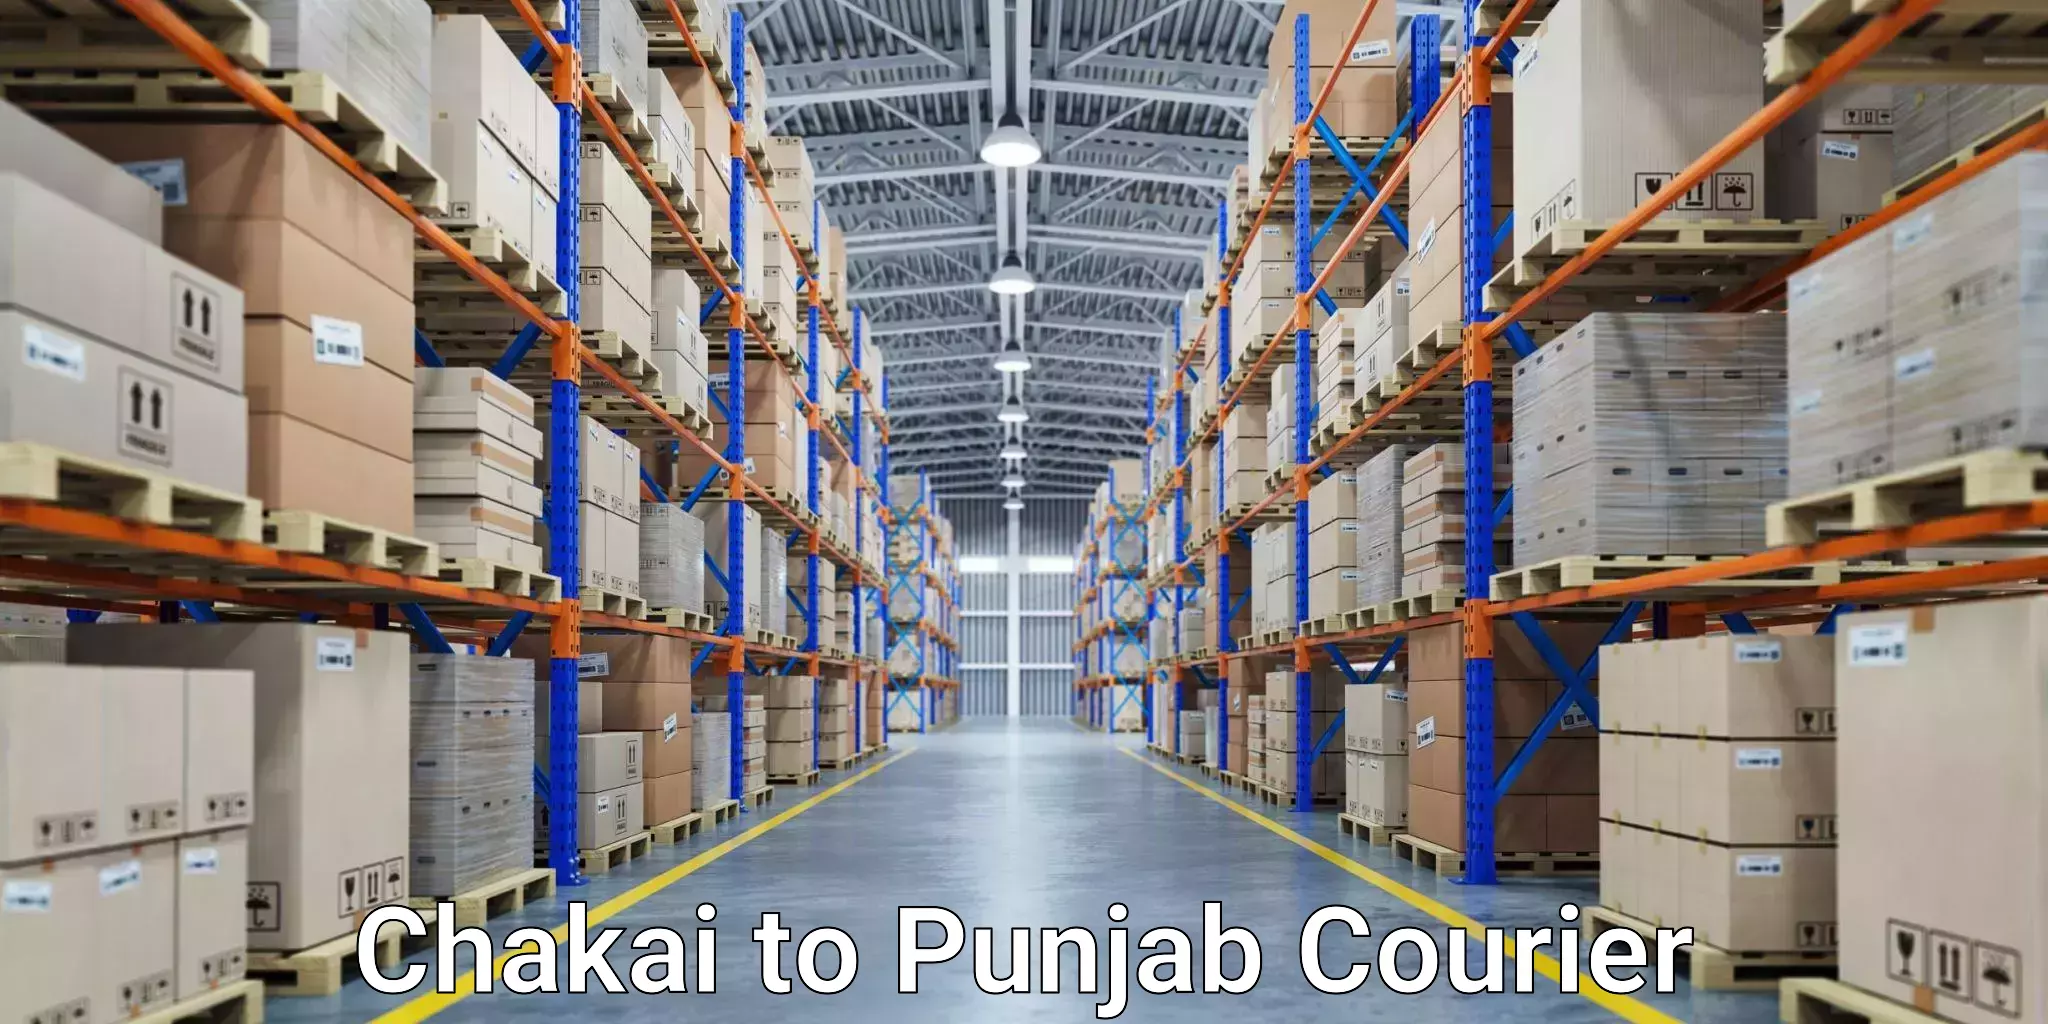 Courier service partnerships Chakai to Punjab